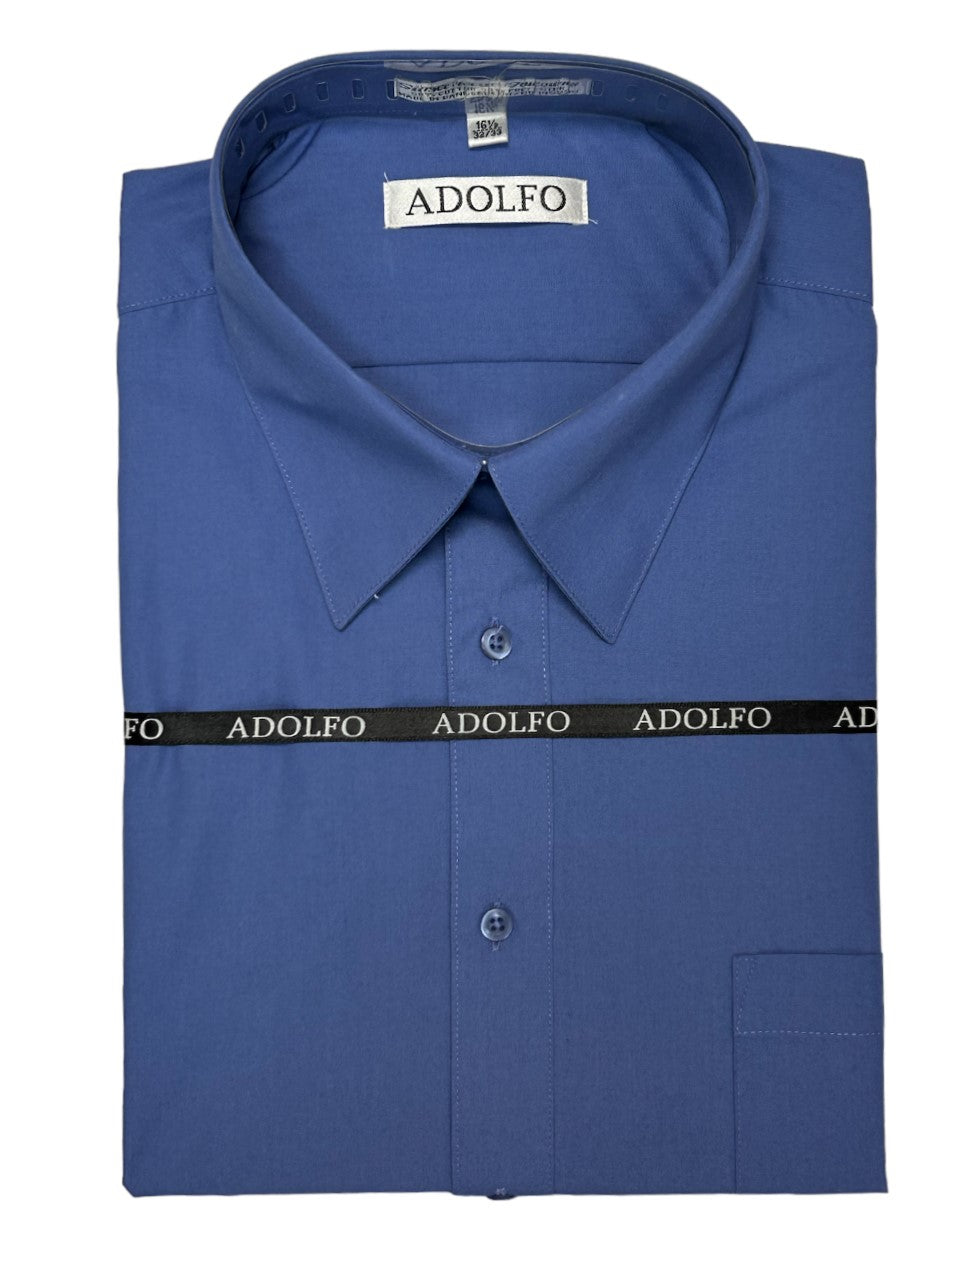 ADOLFO REGULAR FIT DRESS SHIRT-French Blue